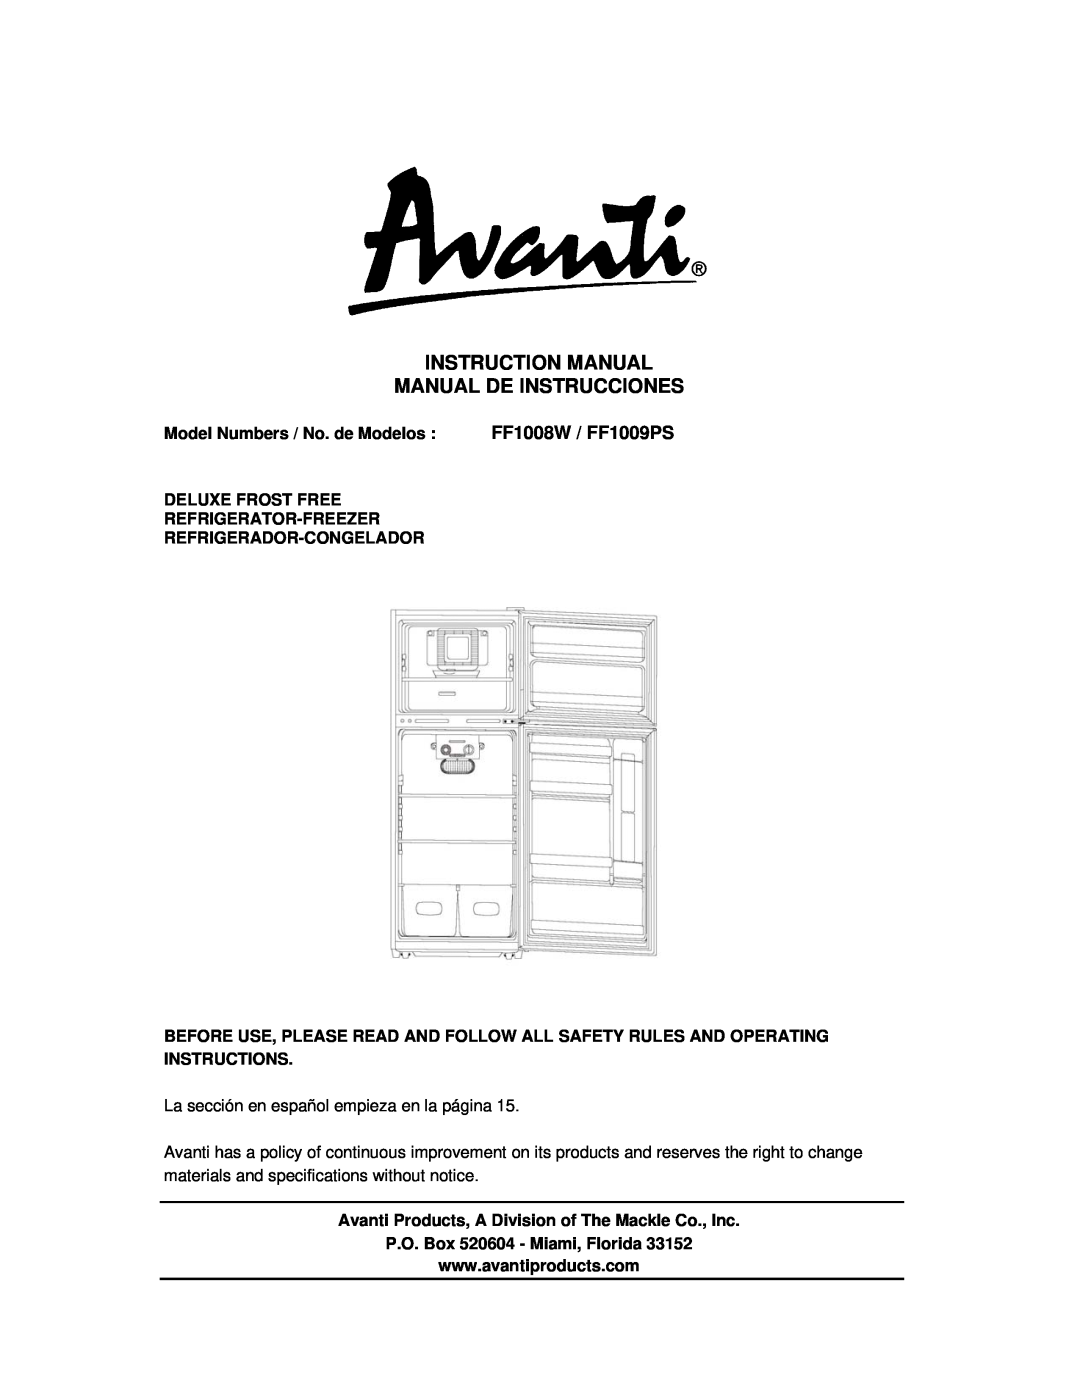 Avanti FF1009PS, FF1008W instruction manual Instruction Manual Manual De Instrucciones, Model Numbers / No. de Modelos 